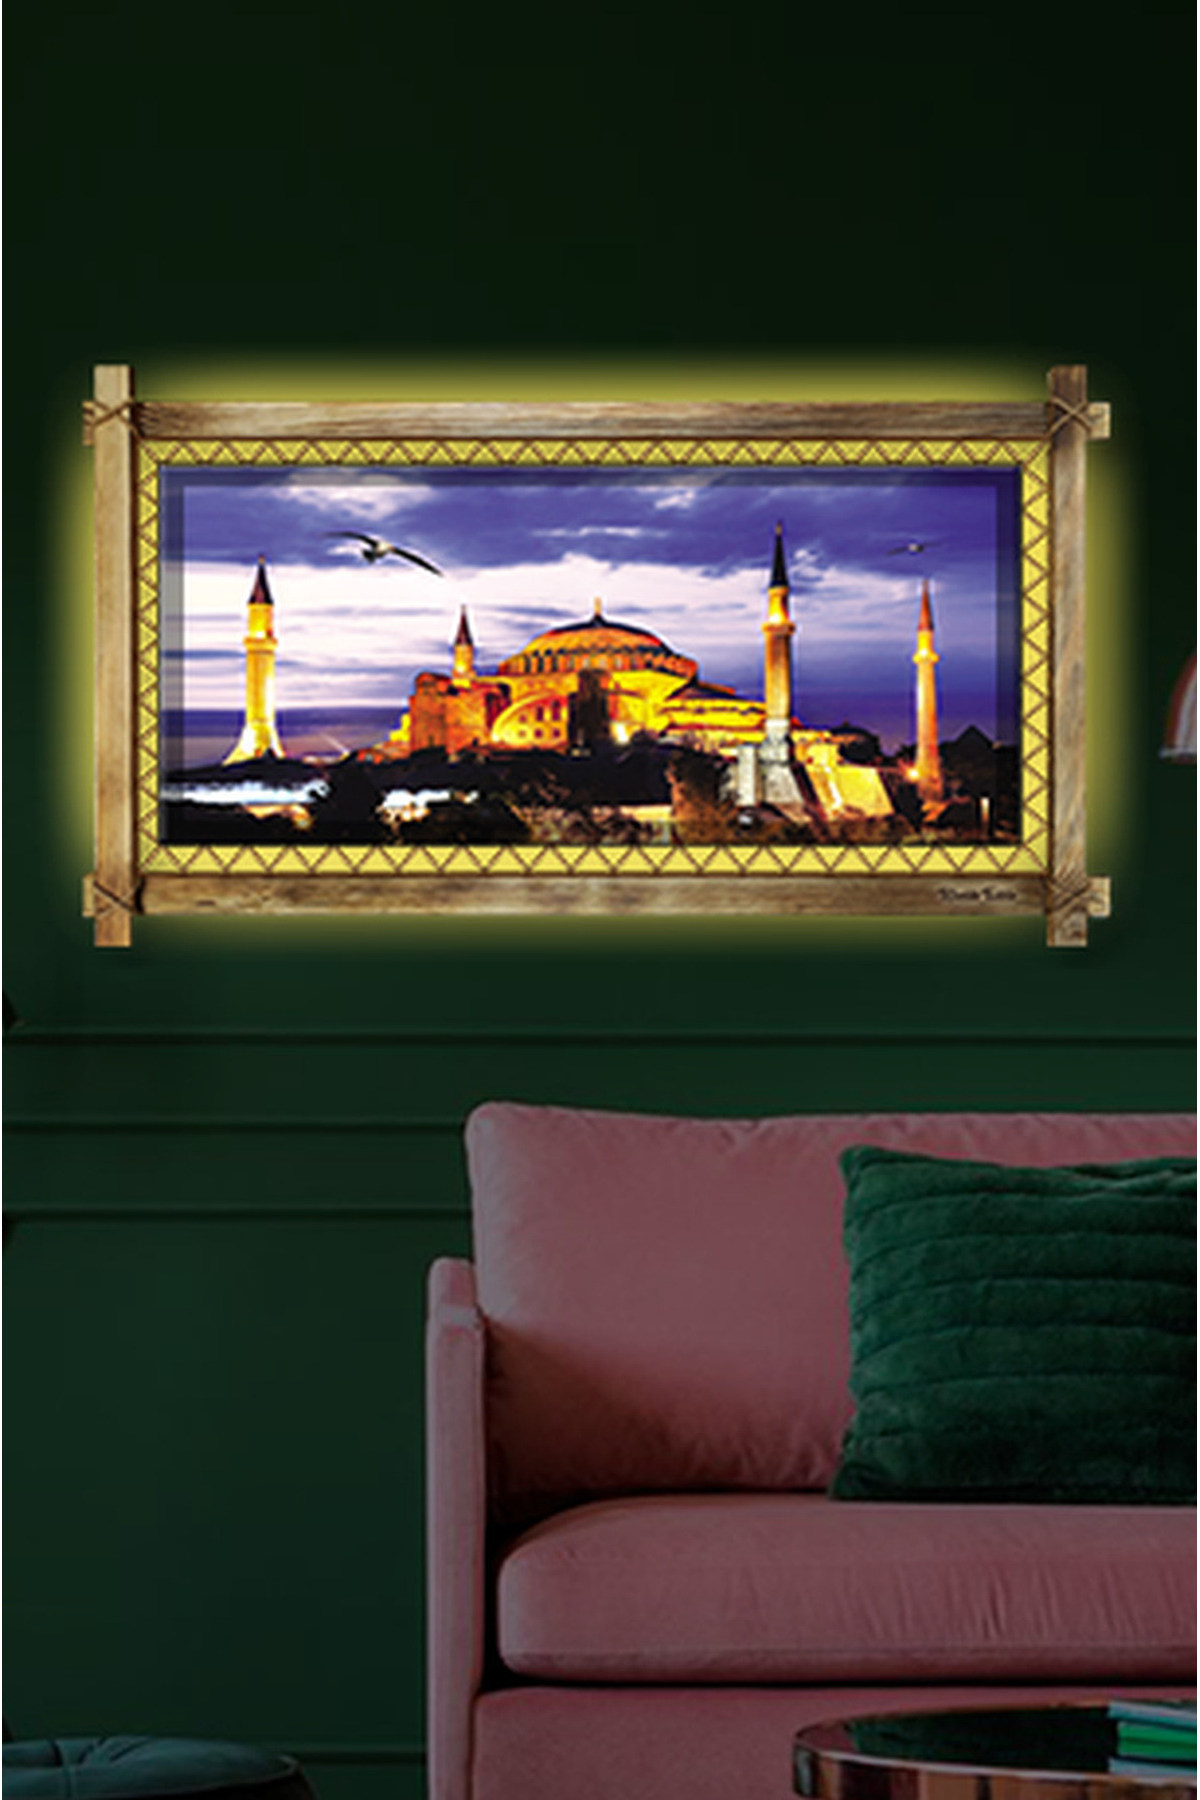 CLZ104 Camii LED IŞIKLI RUSTİK kanvas tablo B  (96 x 66) cm